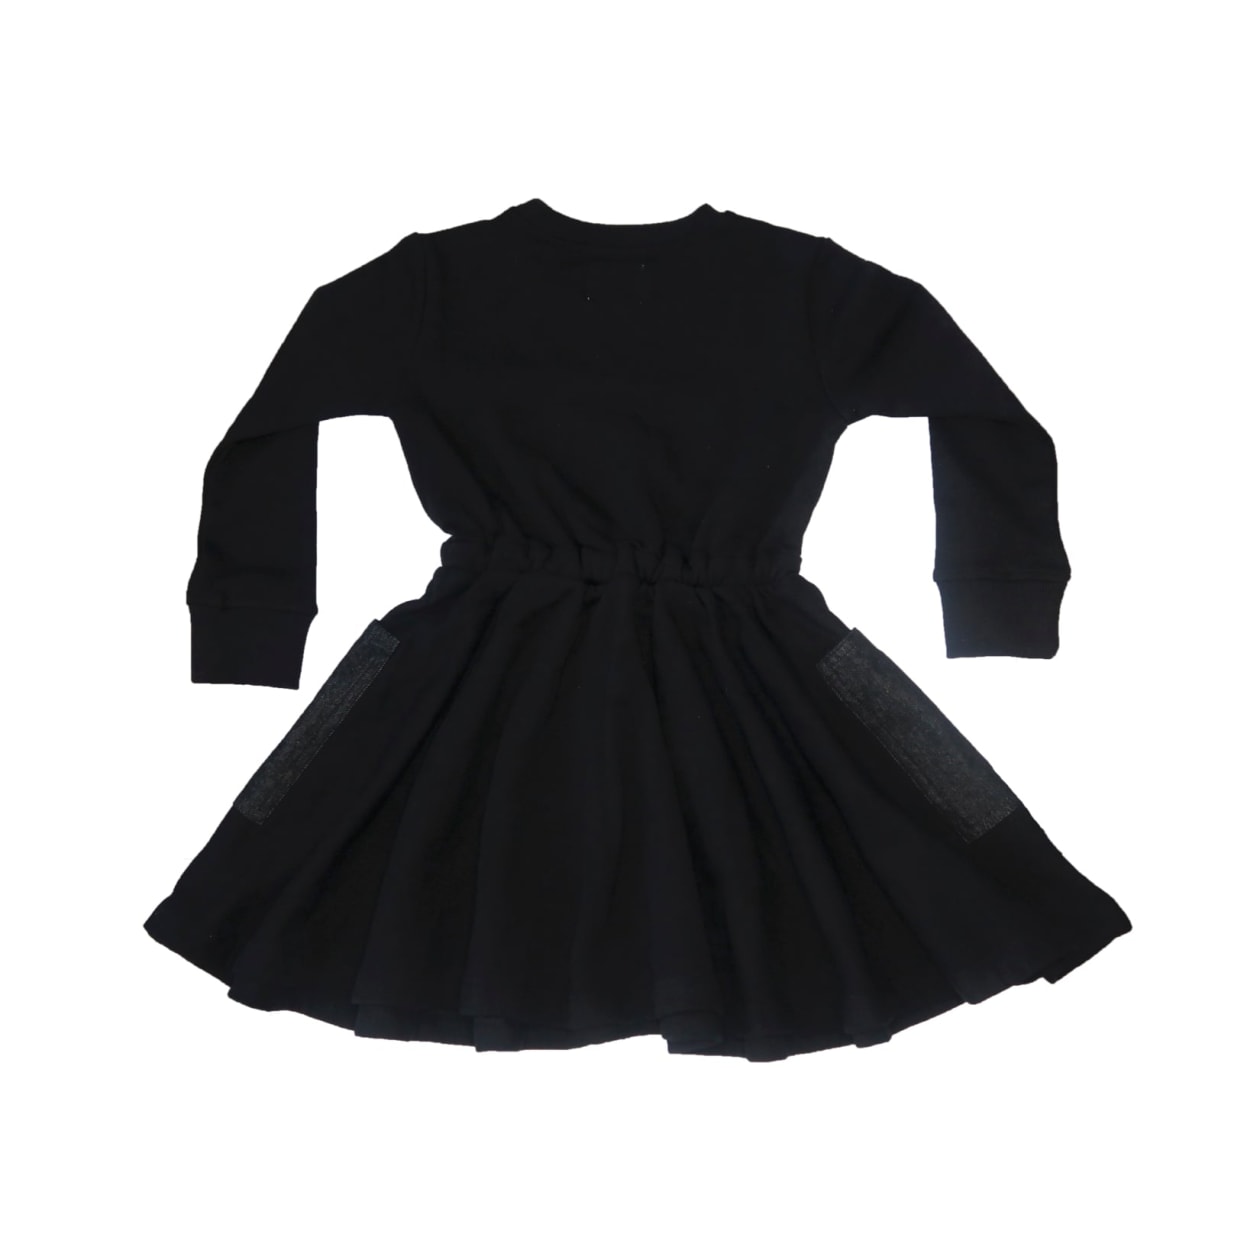 Black Dress with Denim Pockets